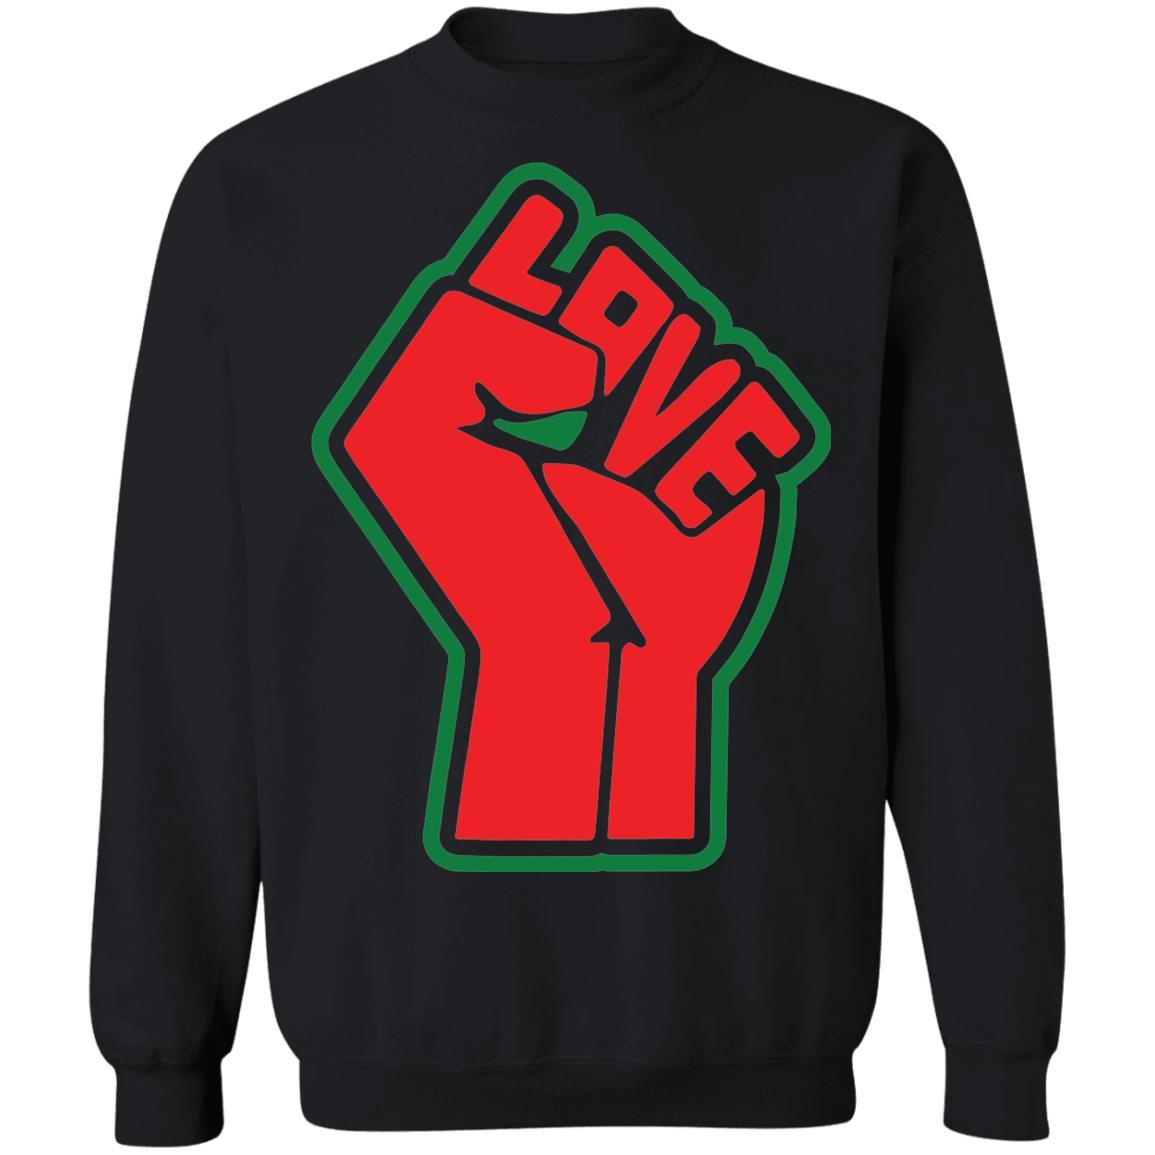 Love Apparel CustomCat Crewneck Sweatshirt Black S